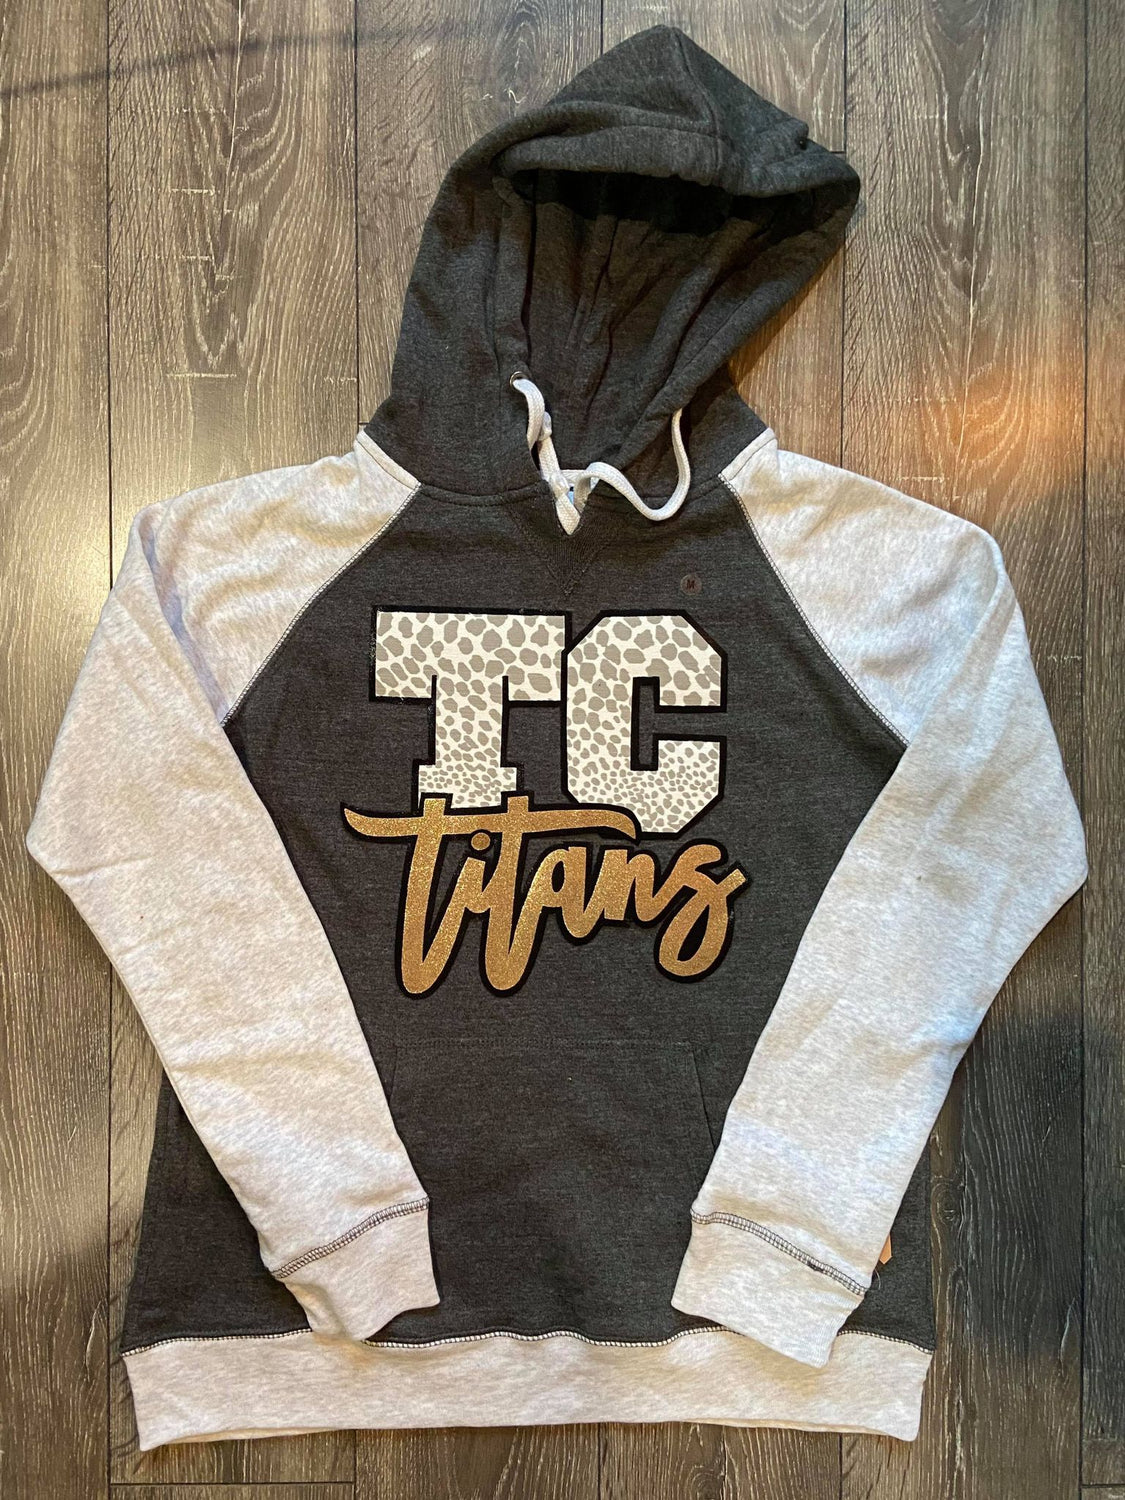 TC TITANS - GREY COLORBLOCK HOODIE